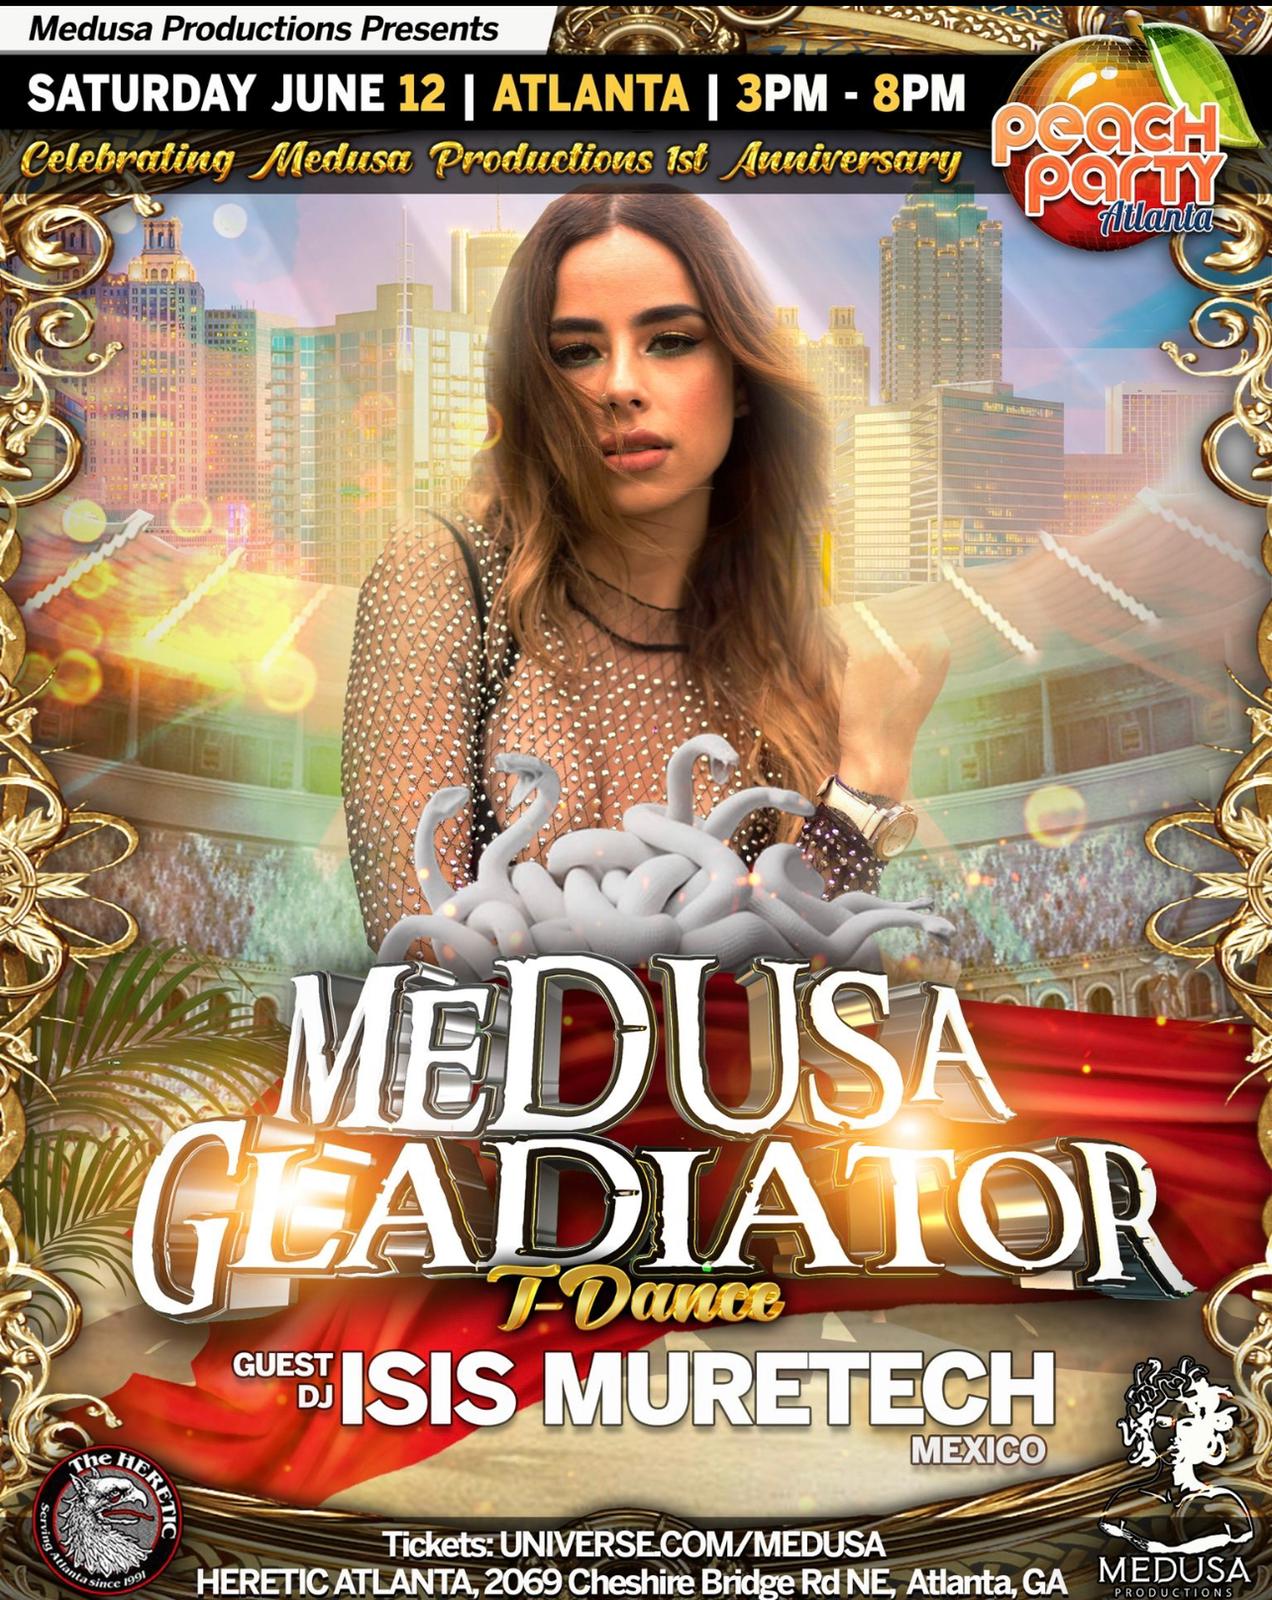 Medusa Gladiator with DJ Isis Muretech